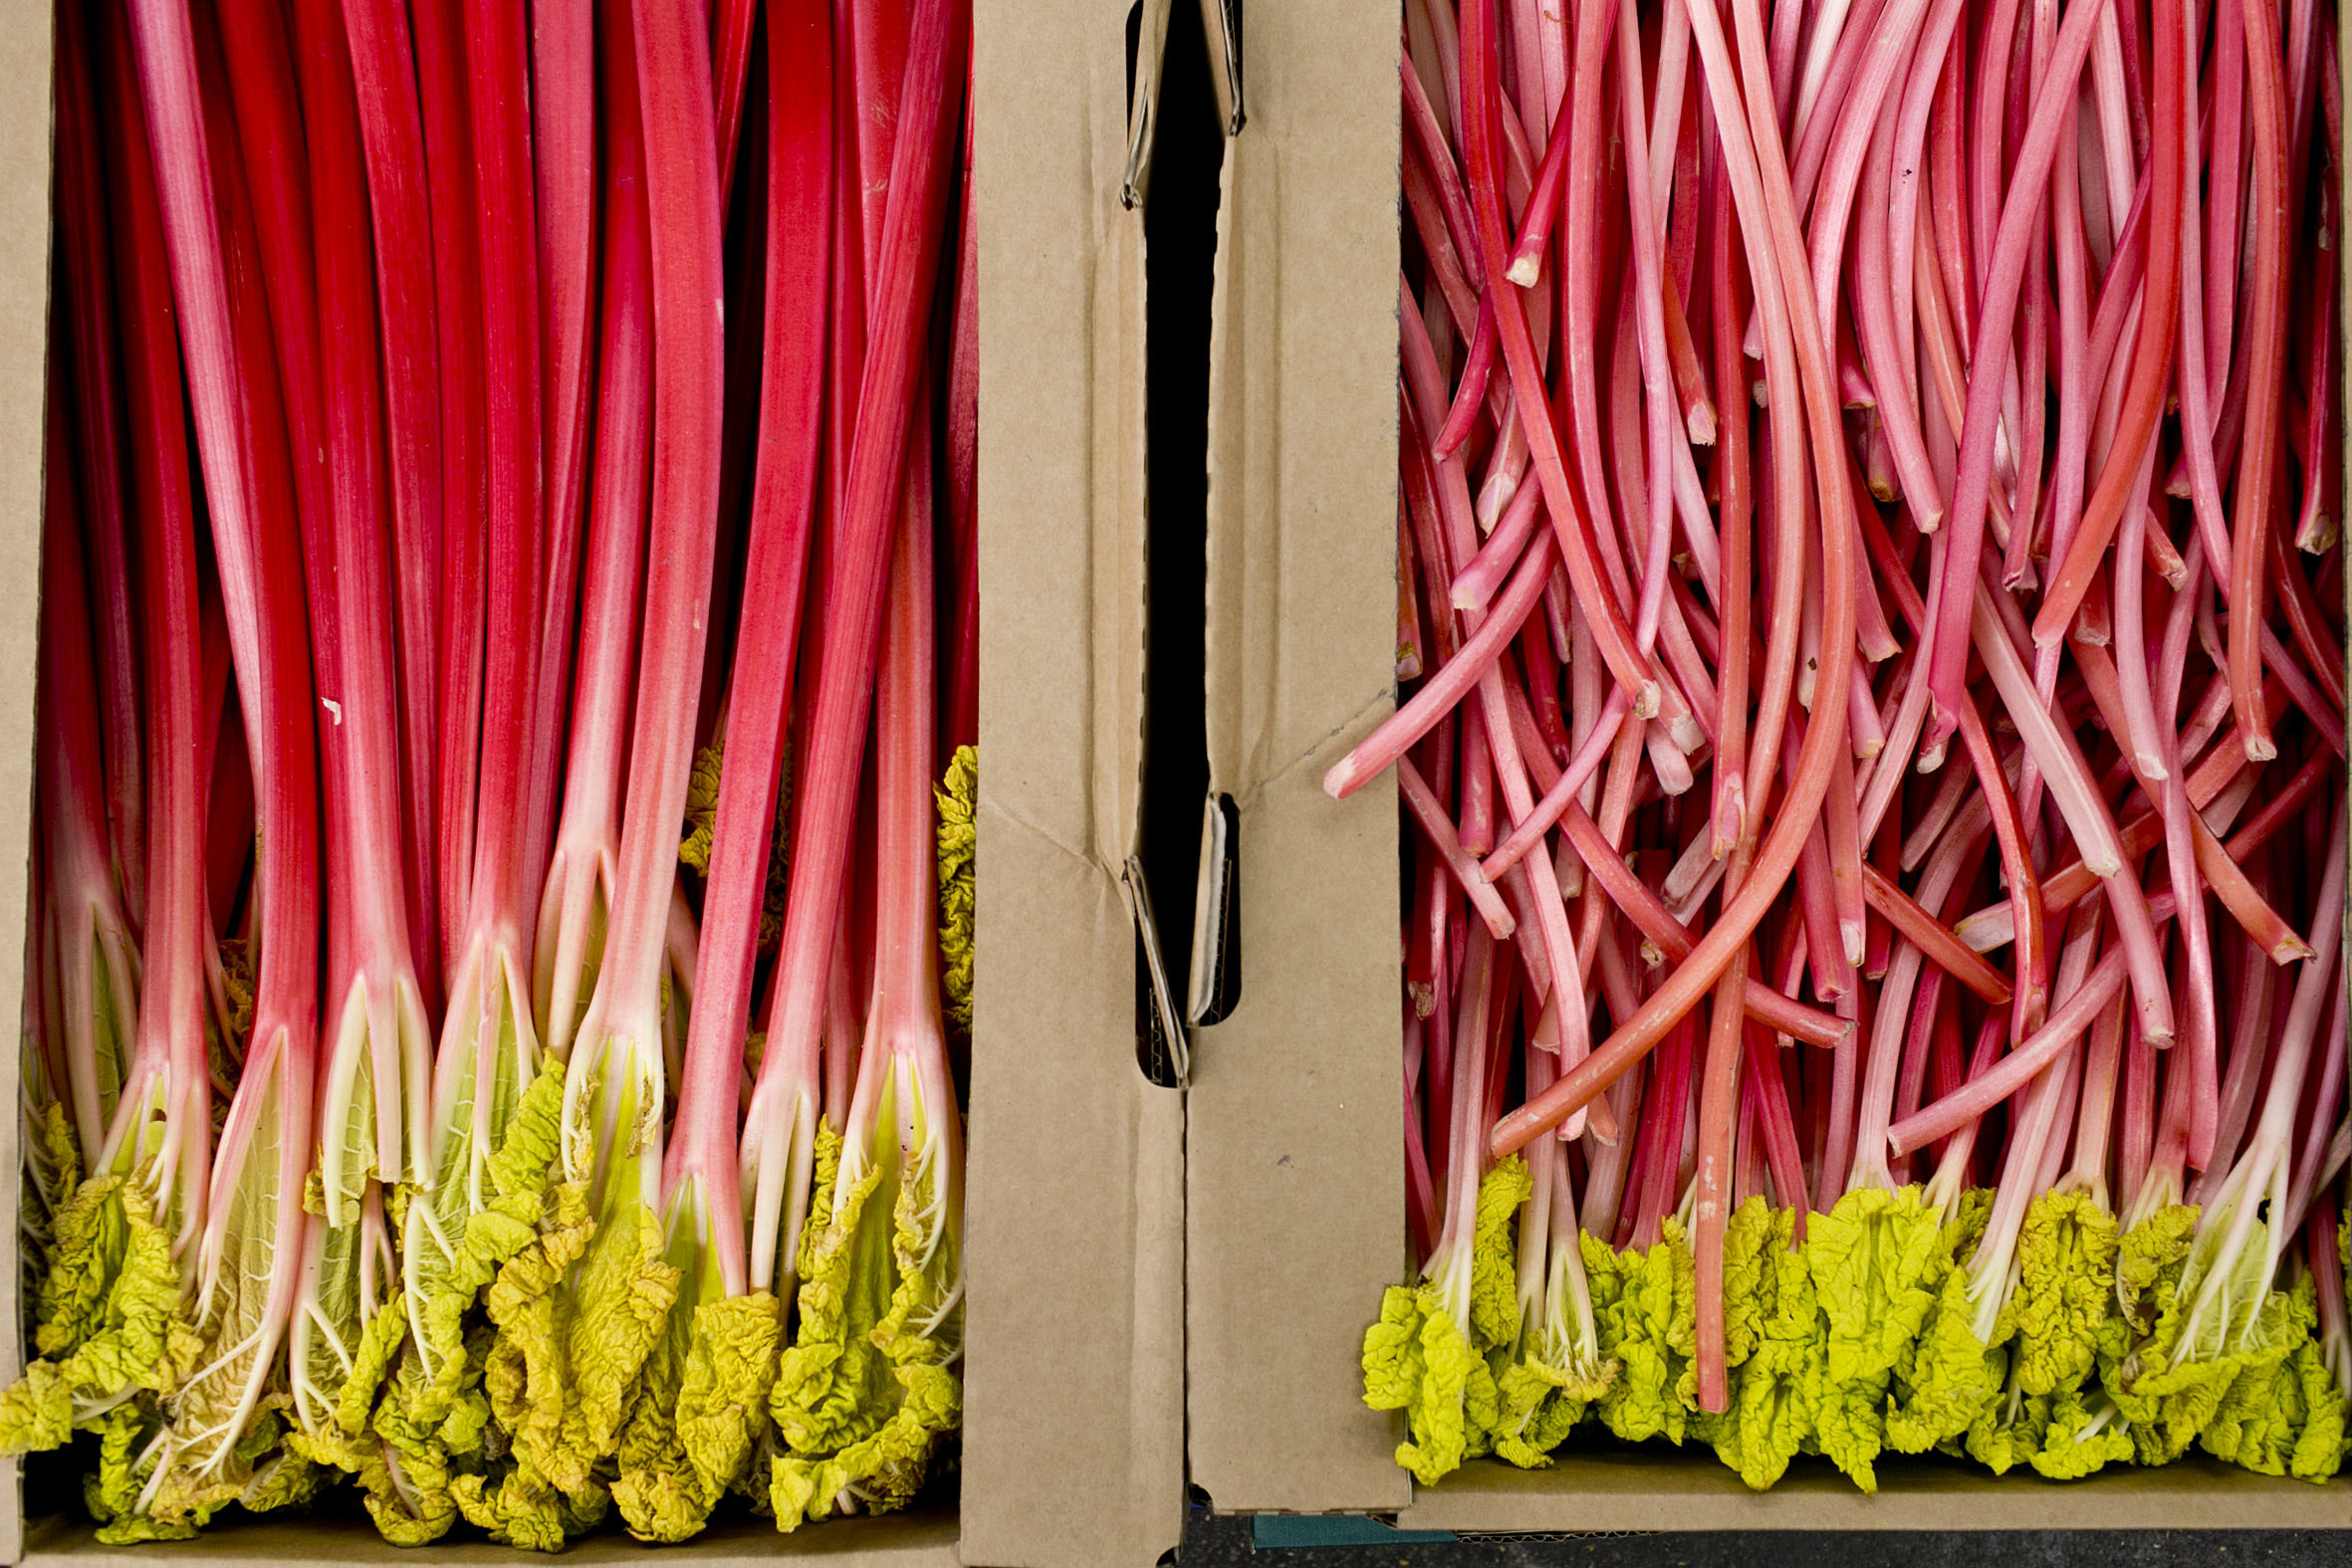 fruit-and-vegetable-market-report-february-2014-rhubarb.jpg?mtime=20170922113427#asset:11353